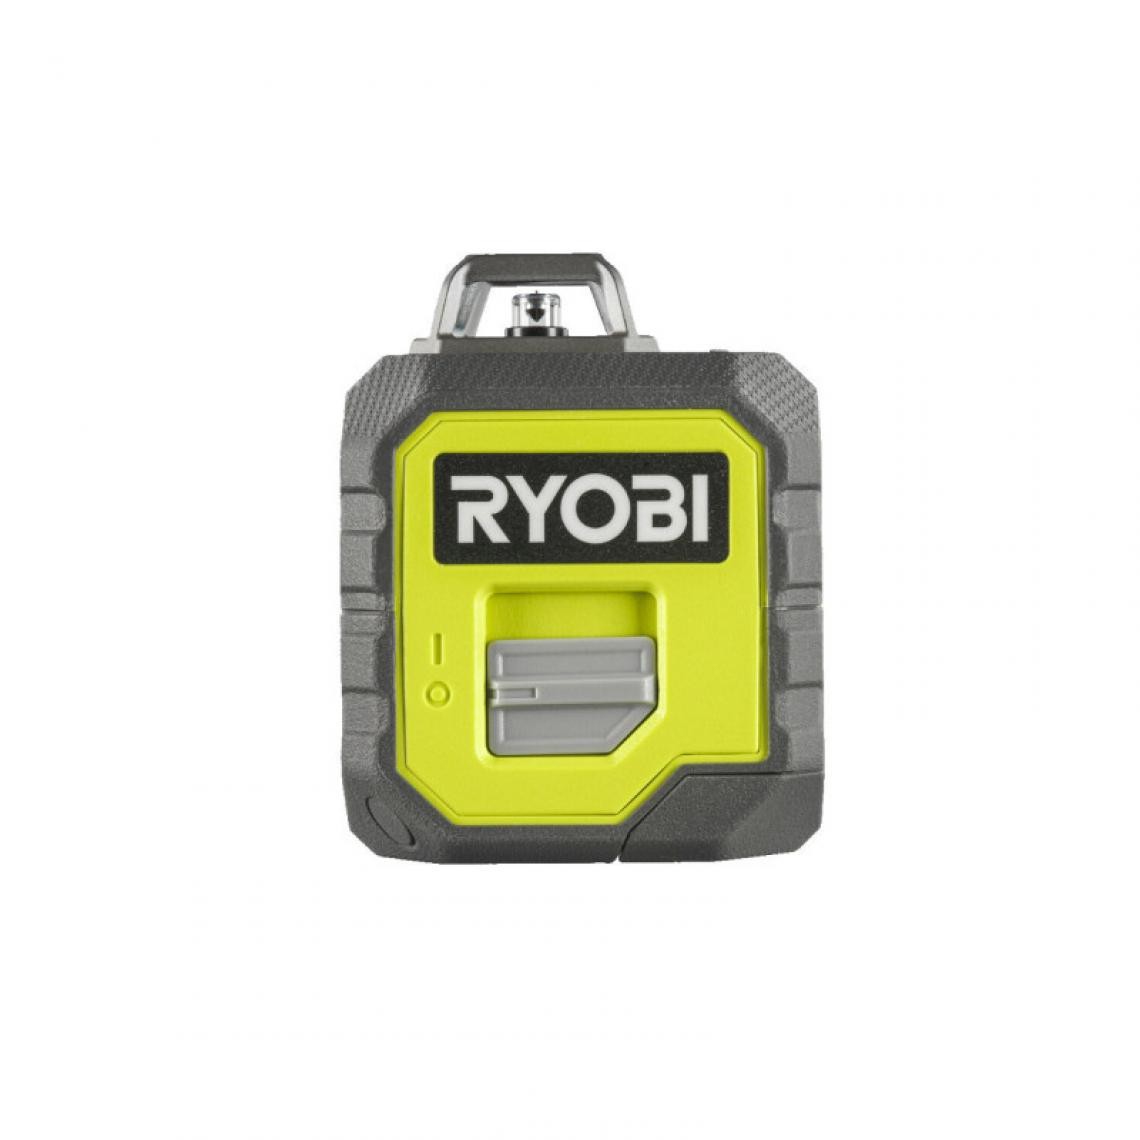 Ryobi - Laser rouge 360 RYOBI - 20m de portée - RB360RLL - Niveaux lasers